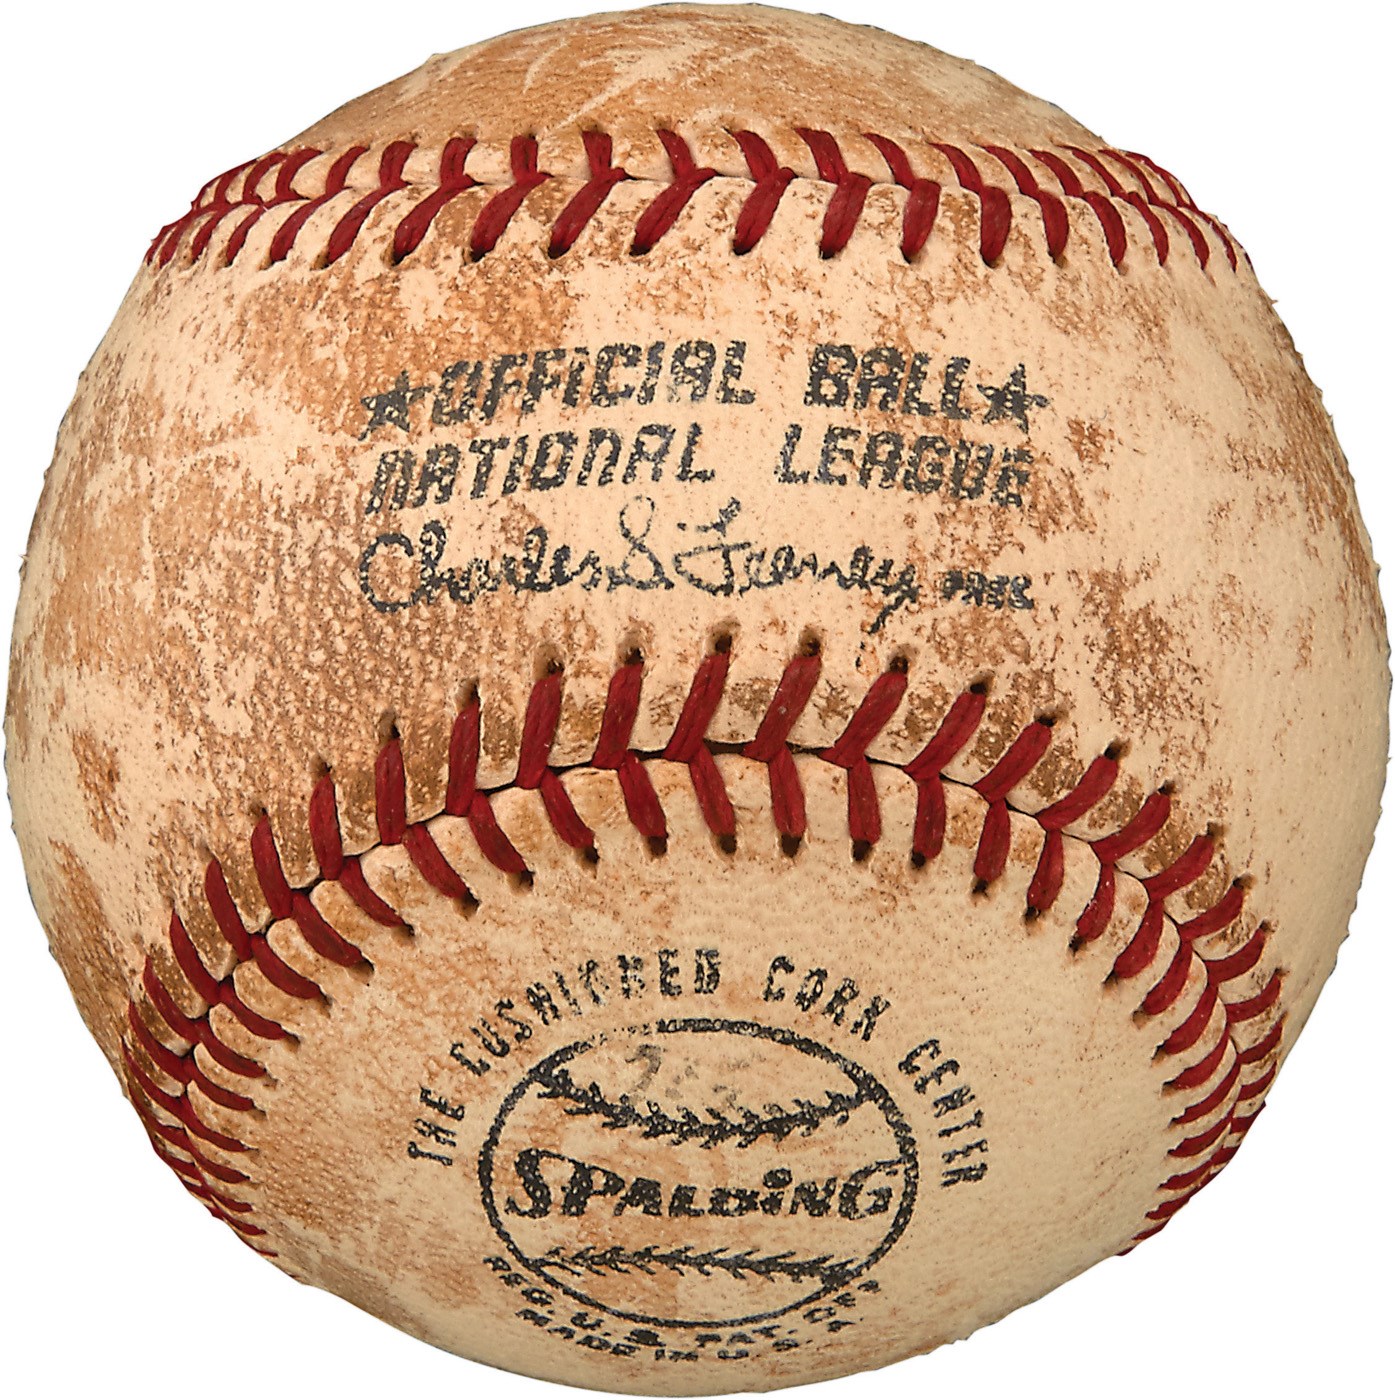 Baseball Equipment - 1973 Hank Aaron 705th Home Run Baseball